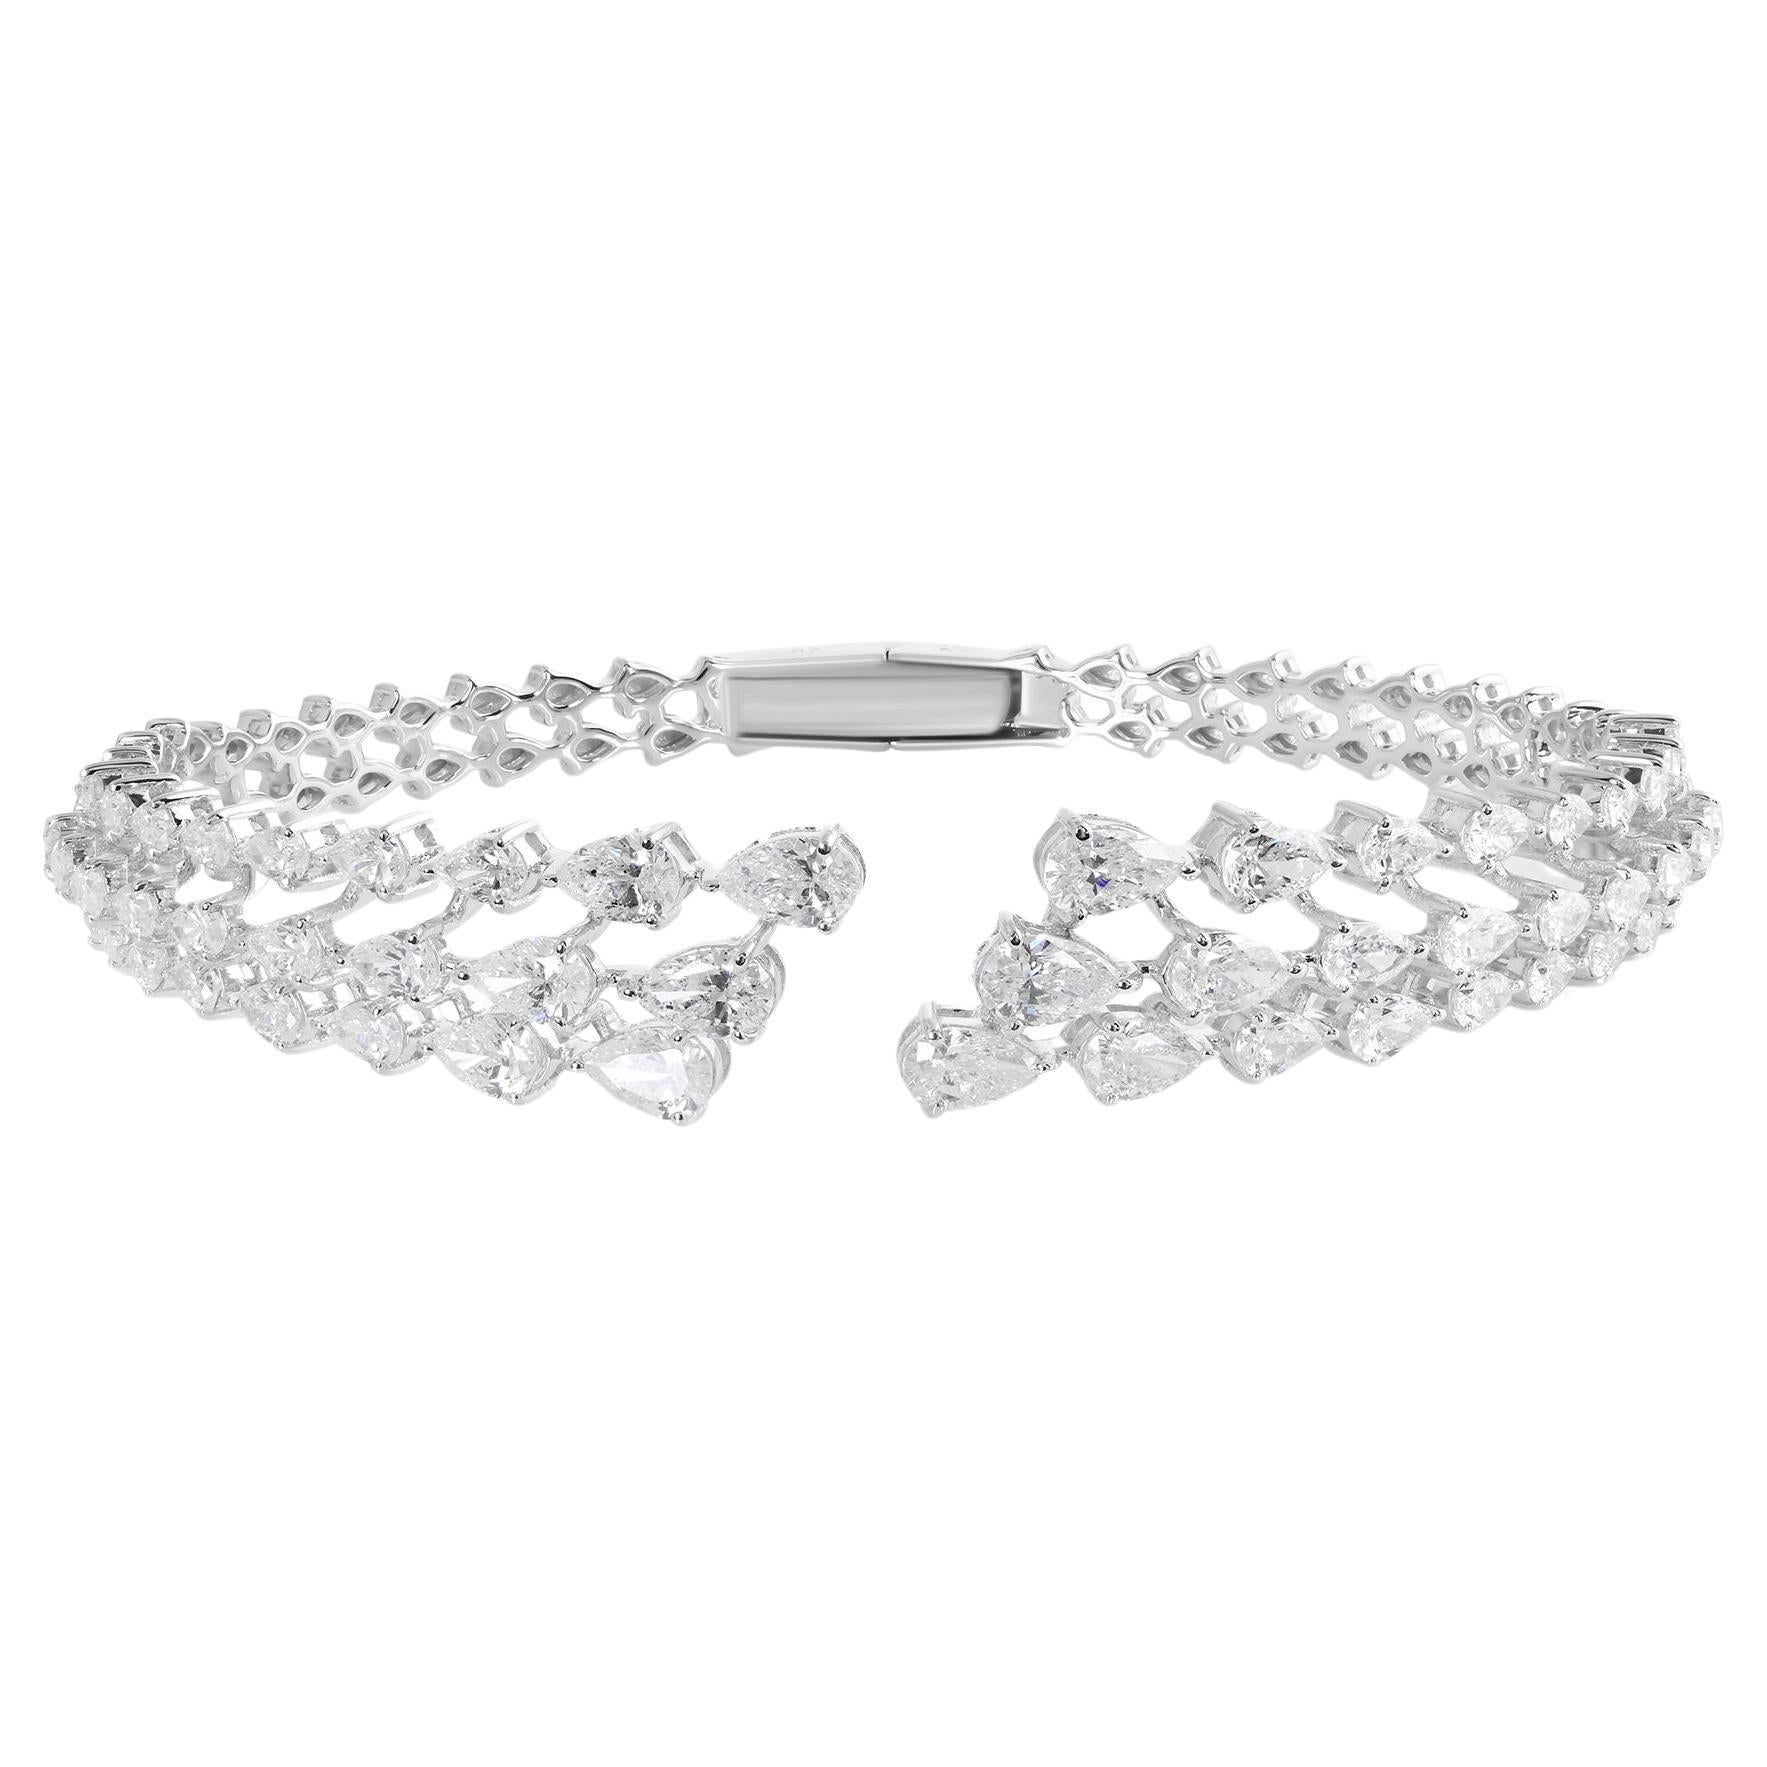 Natural 4.55 Carat Pear Diamond Cuff Bangle Bracelet 18 Karat White Gold Jewelry